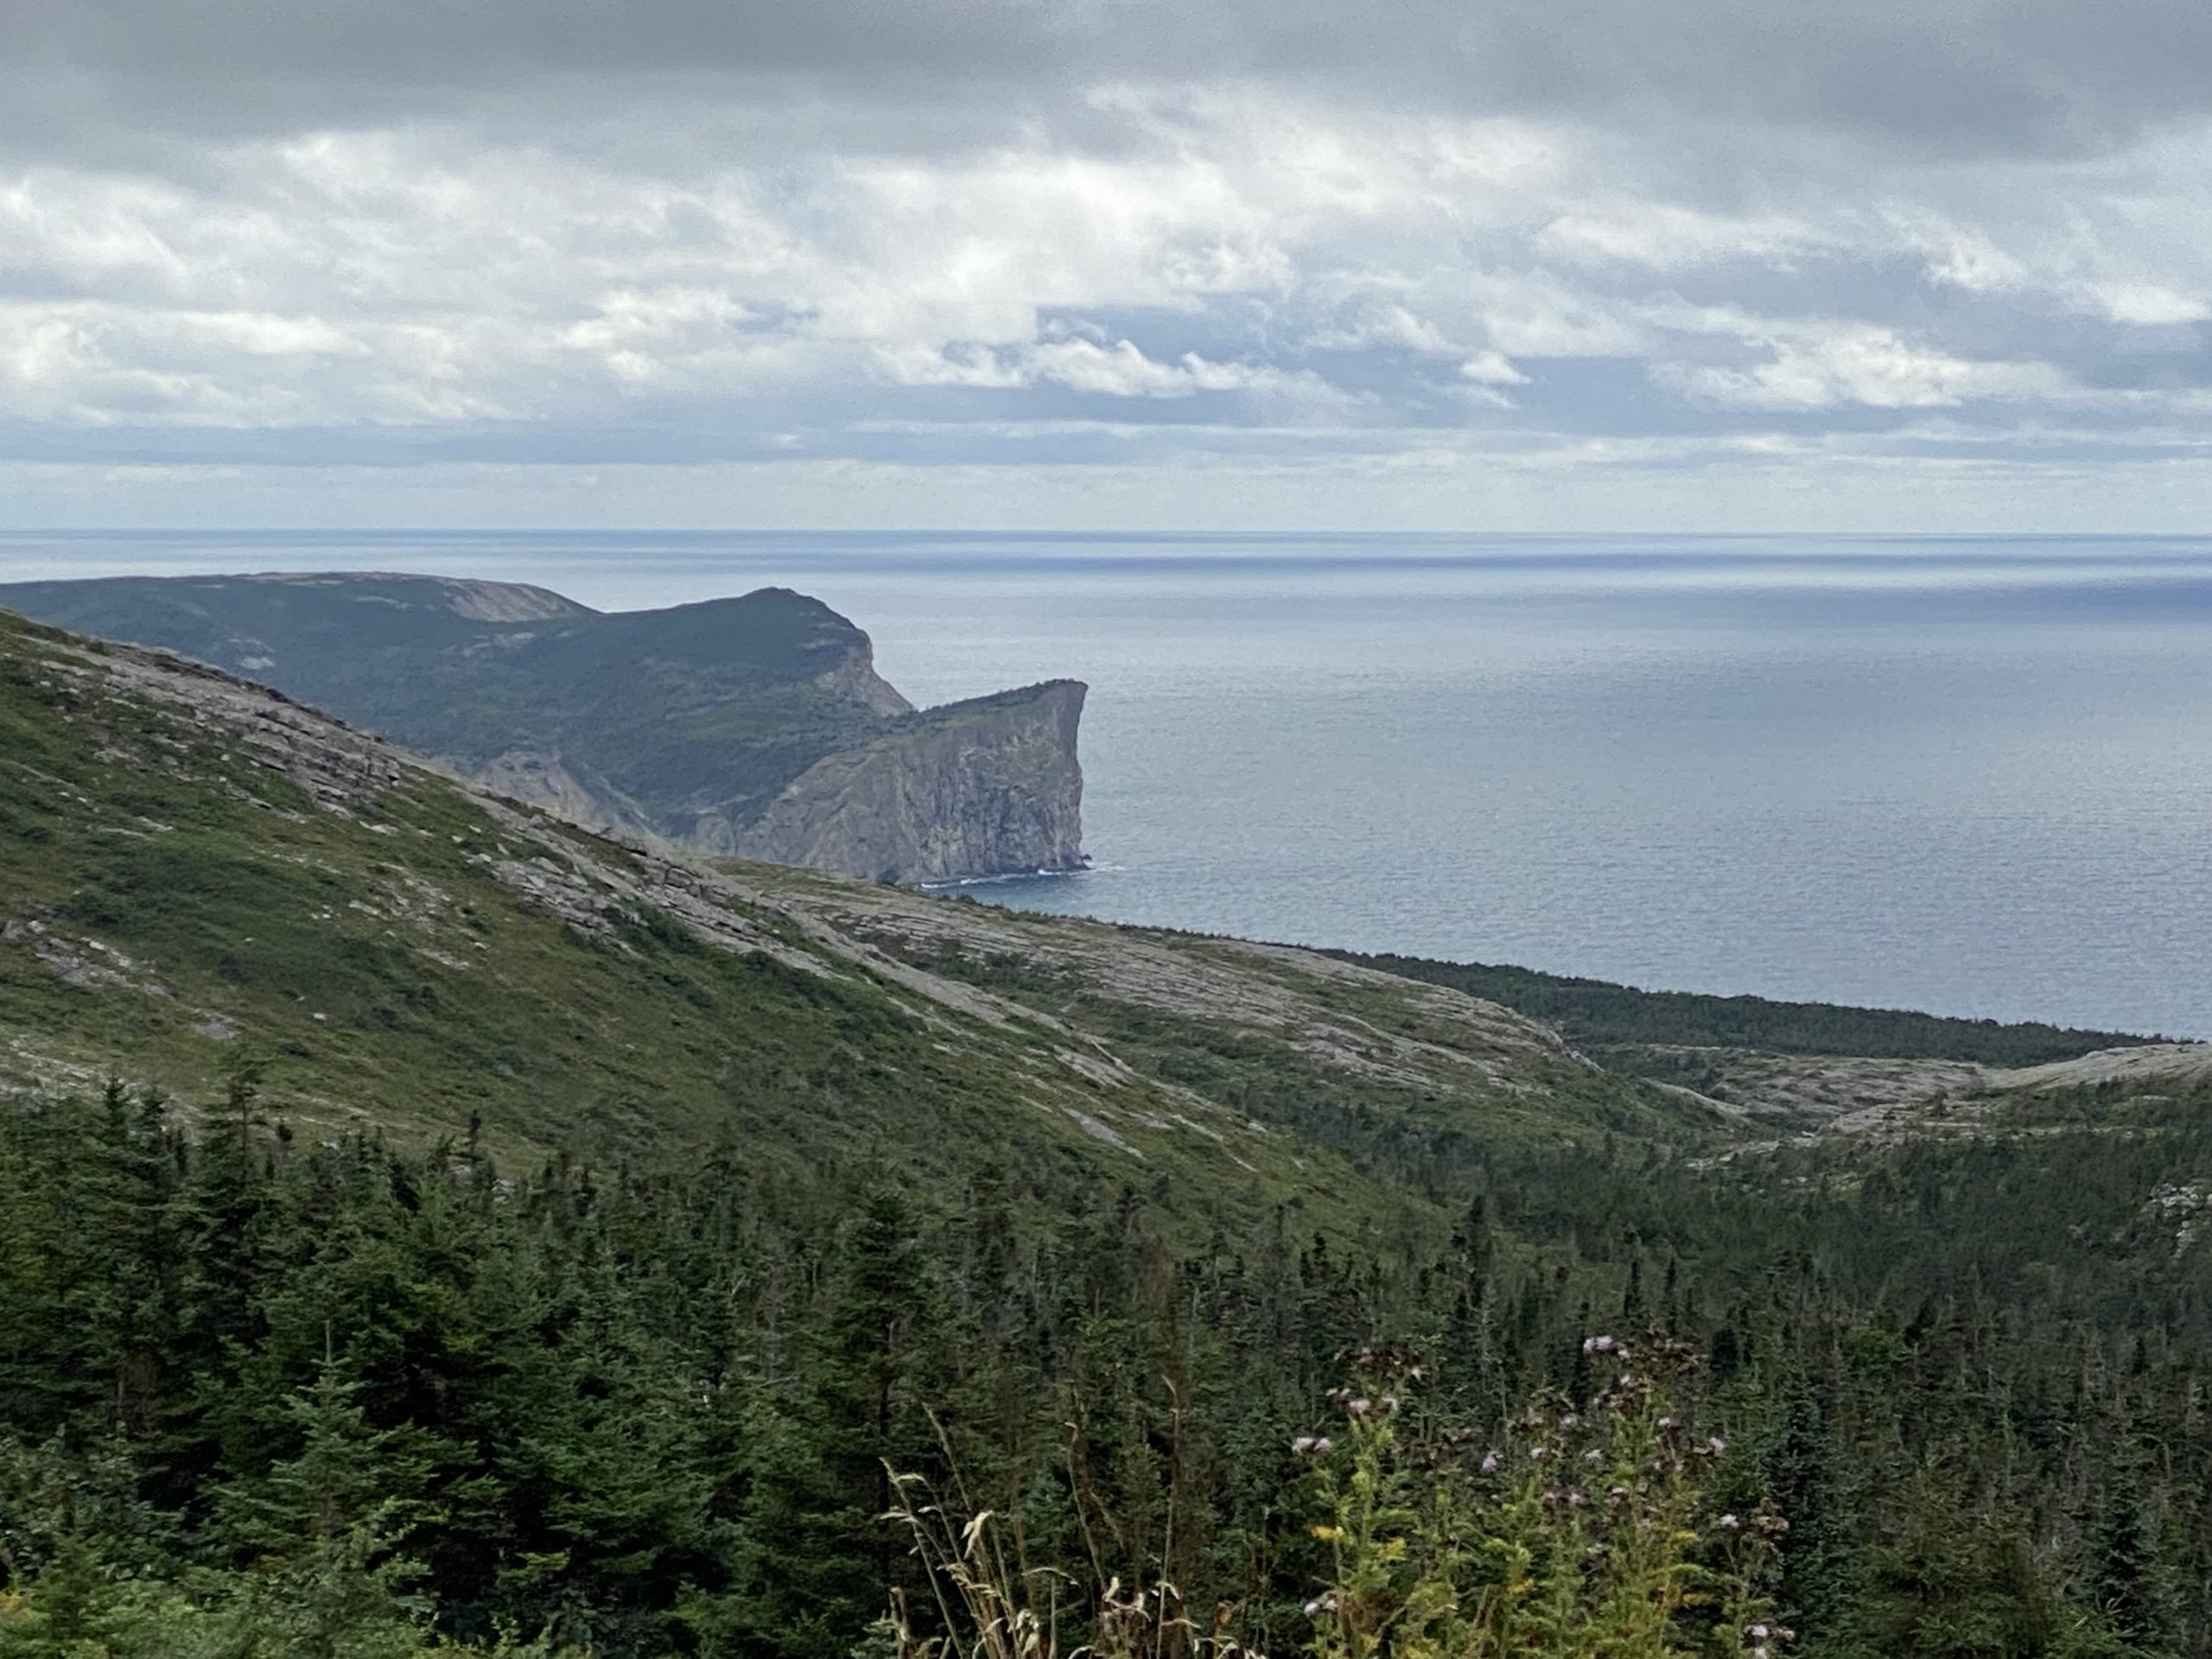 A rock looking like a ship’s prow near Mainland on the Port au Port peninsula in Newfoundland.